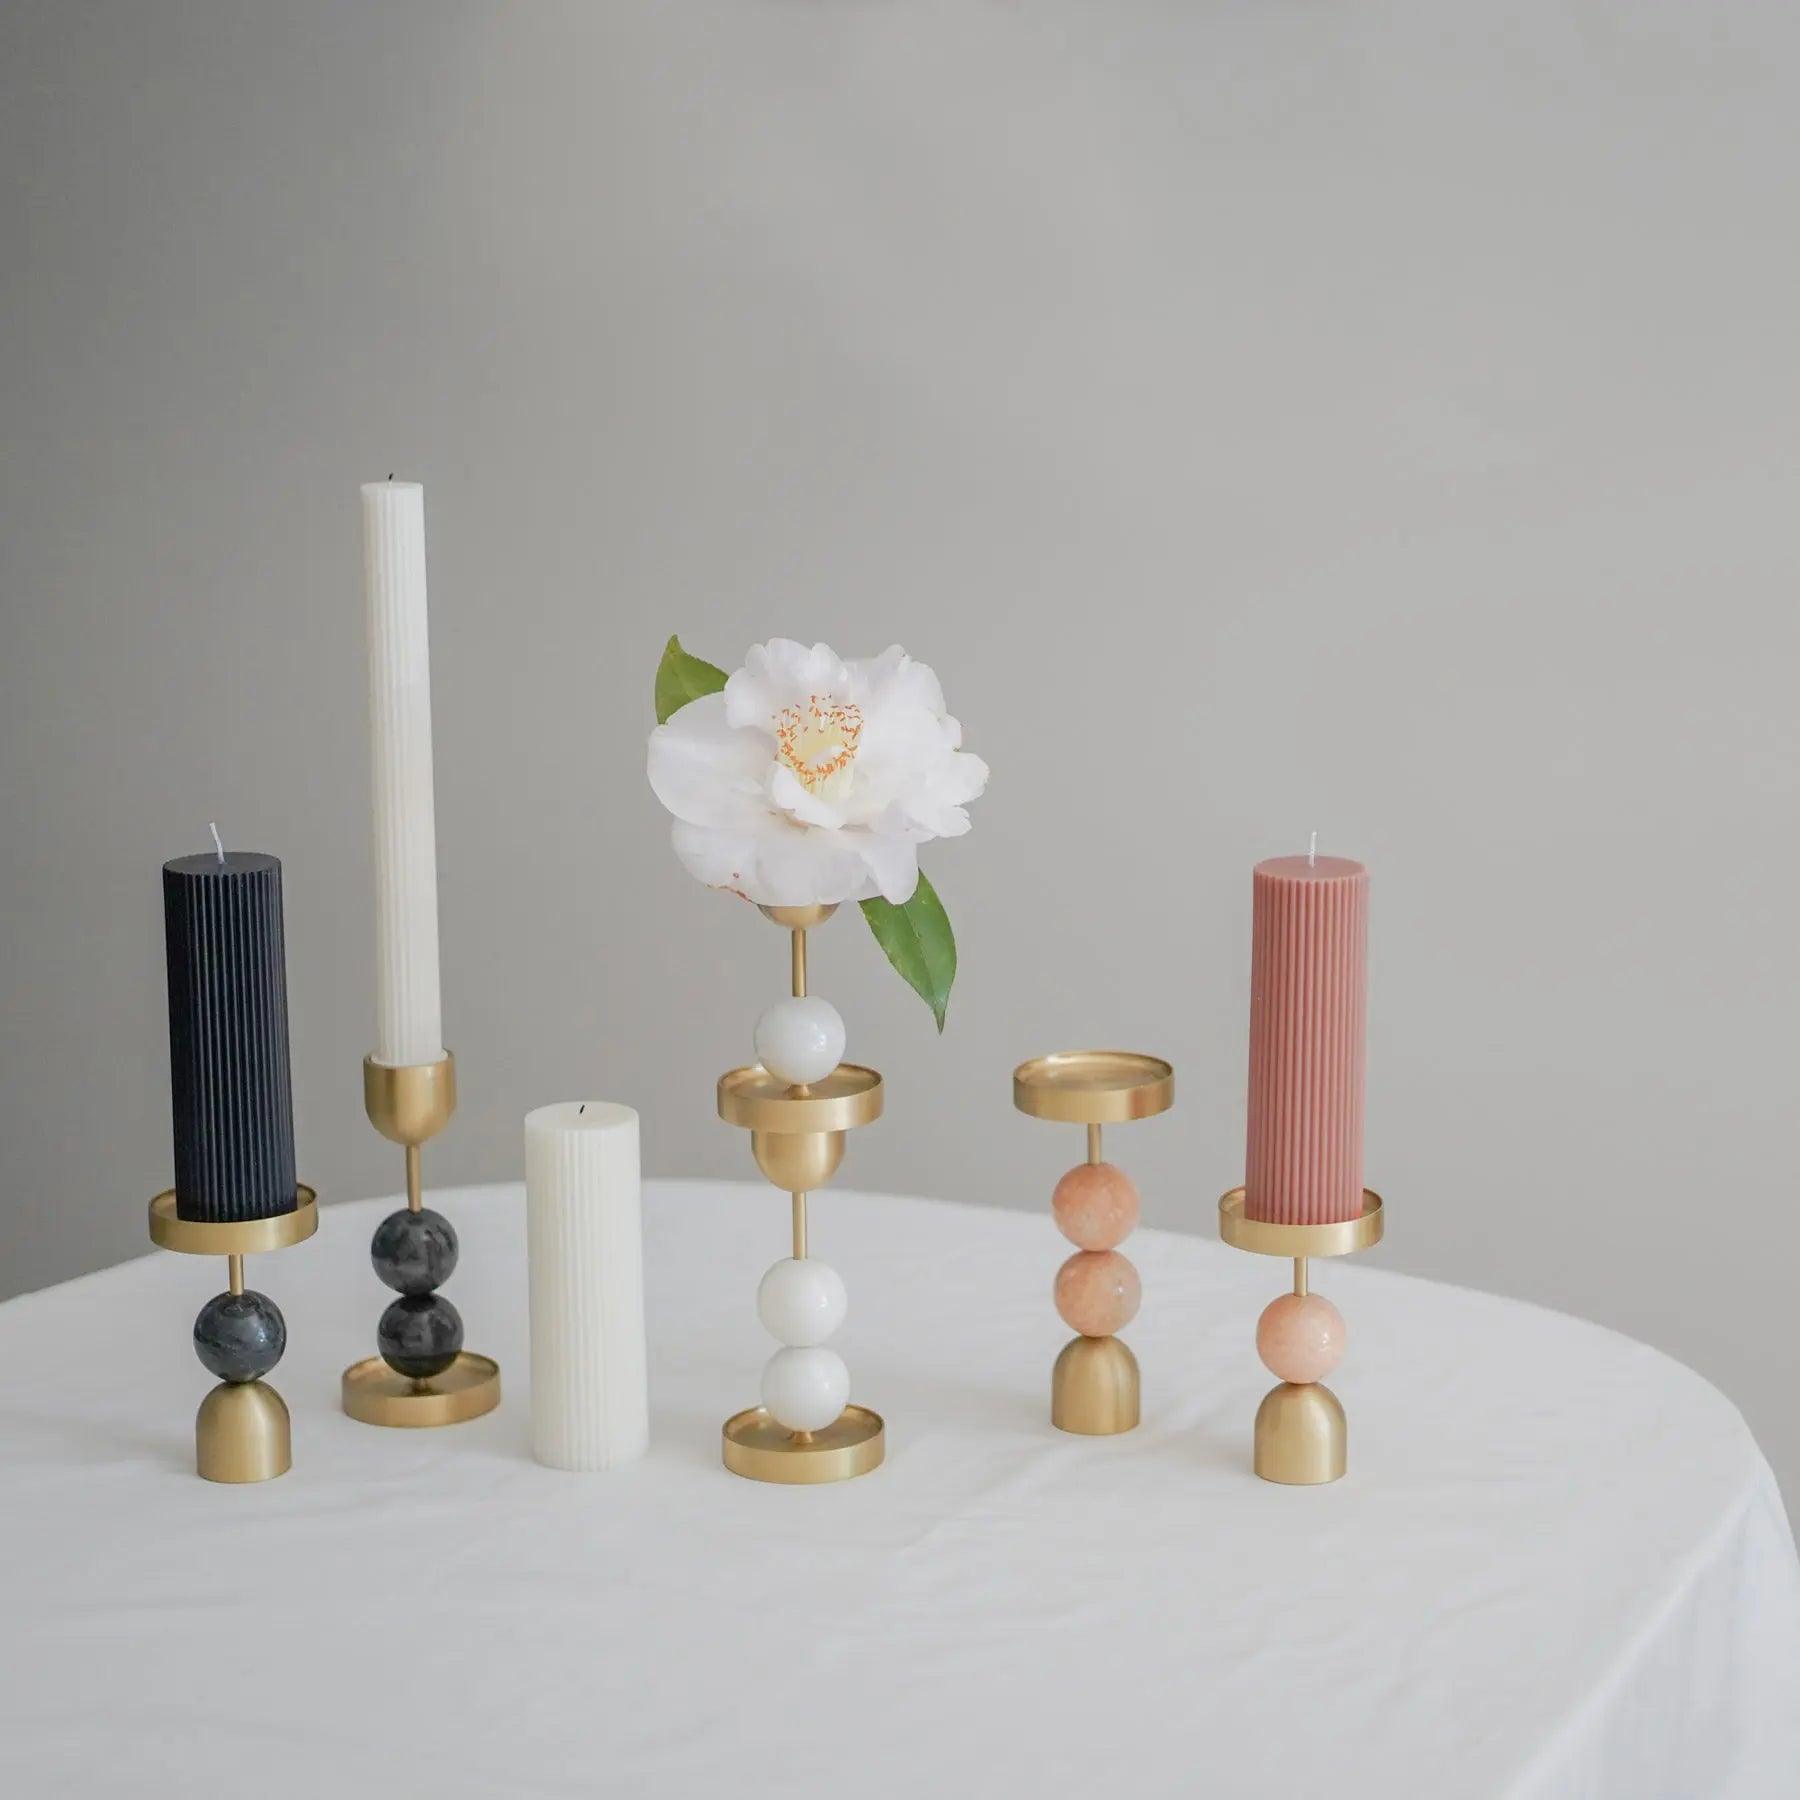 Beaded Fountain Candle Brass Holder - Charcoal Medium - BLACK BLAZE - Pillar Candle - BLACK BLAZE